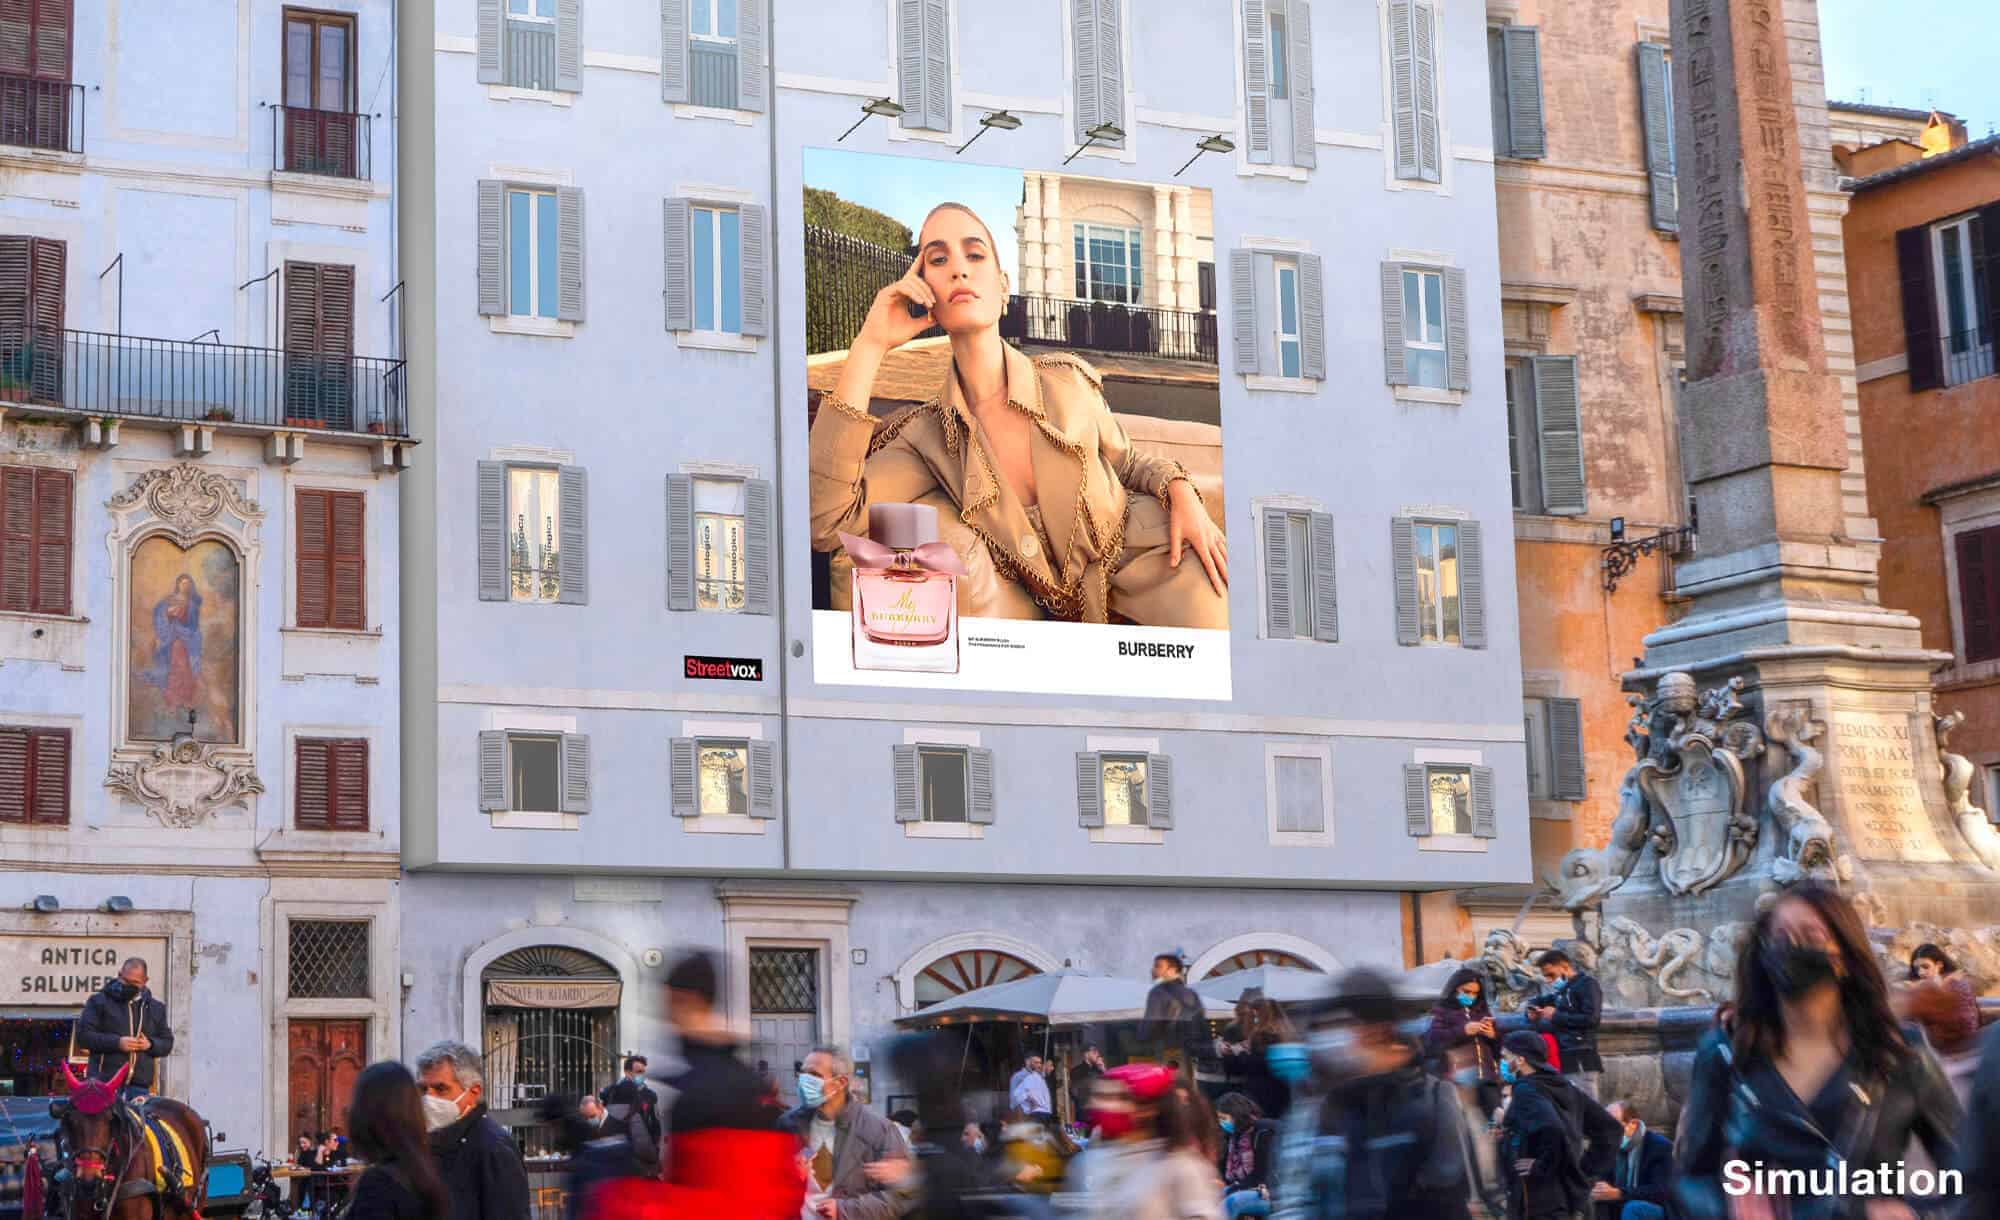 Maxi Affissione a Roma in Piazza del Pantheon con Burberry (Fashion)